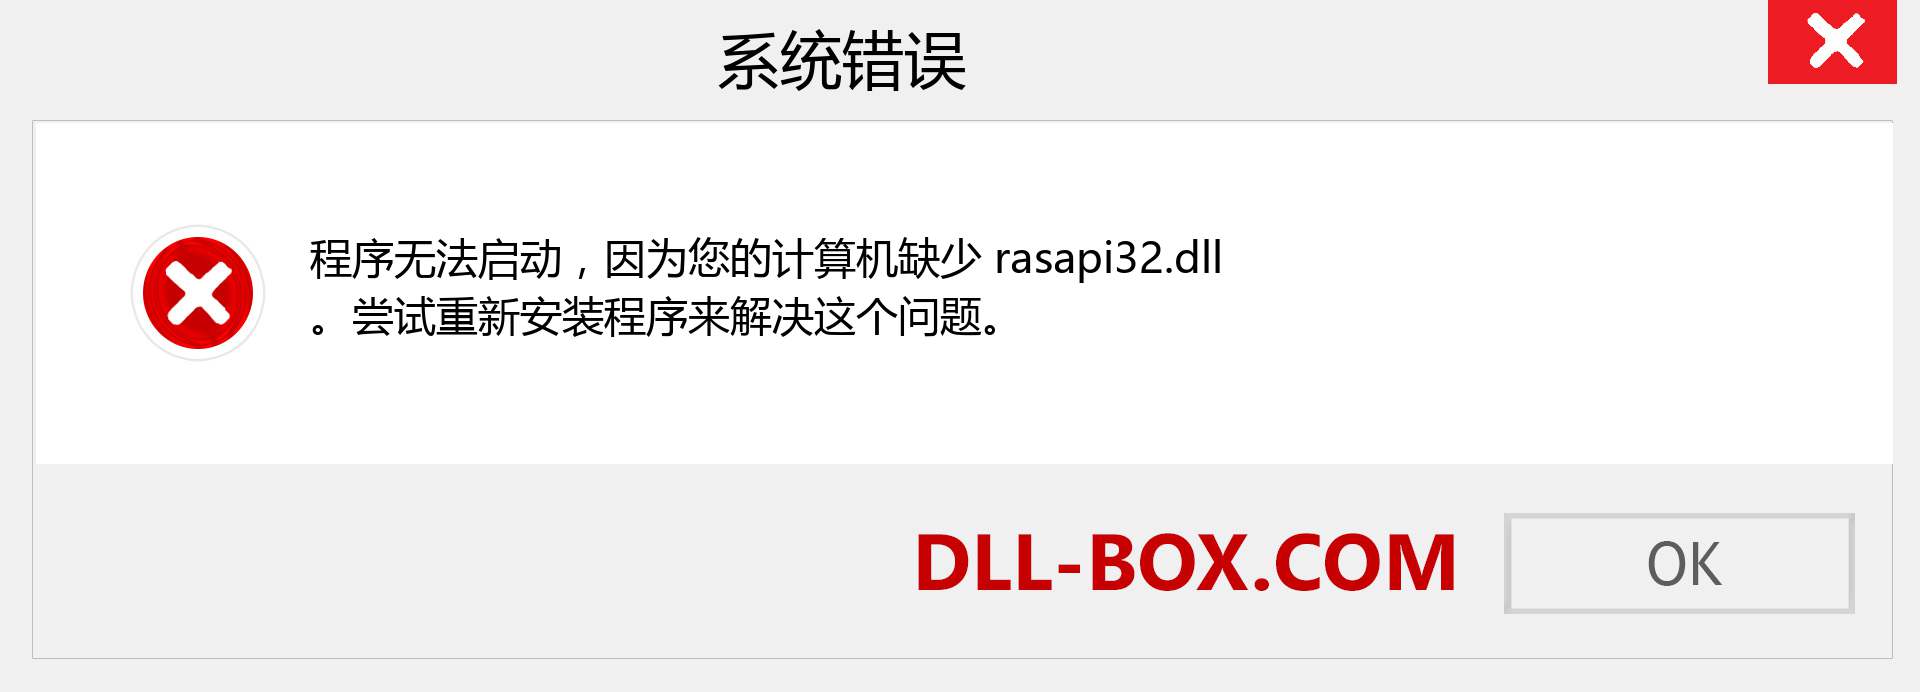 rasapi32.dll 文件丢失？。 适用于 Windows 7、8、10 的下载 - 修复 Windows、照片、图像上的 rasapi32 dll 丢失错误